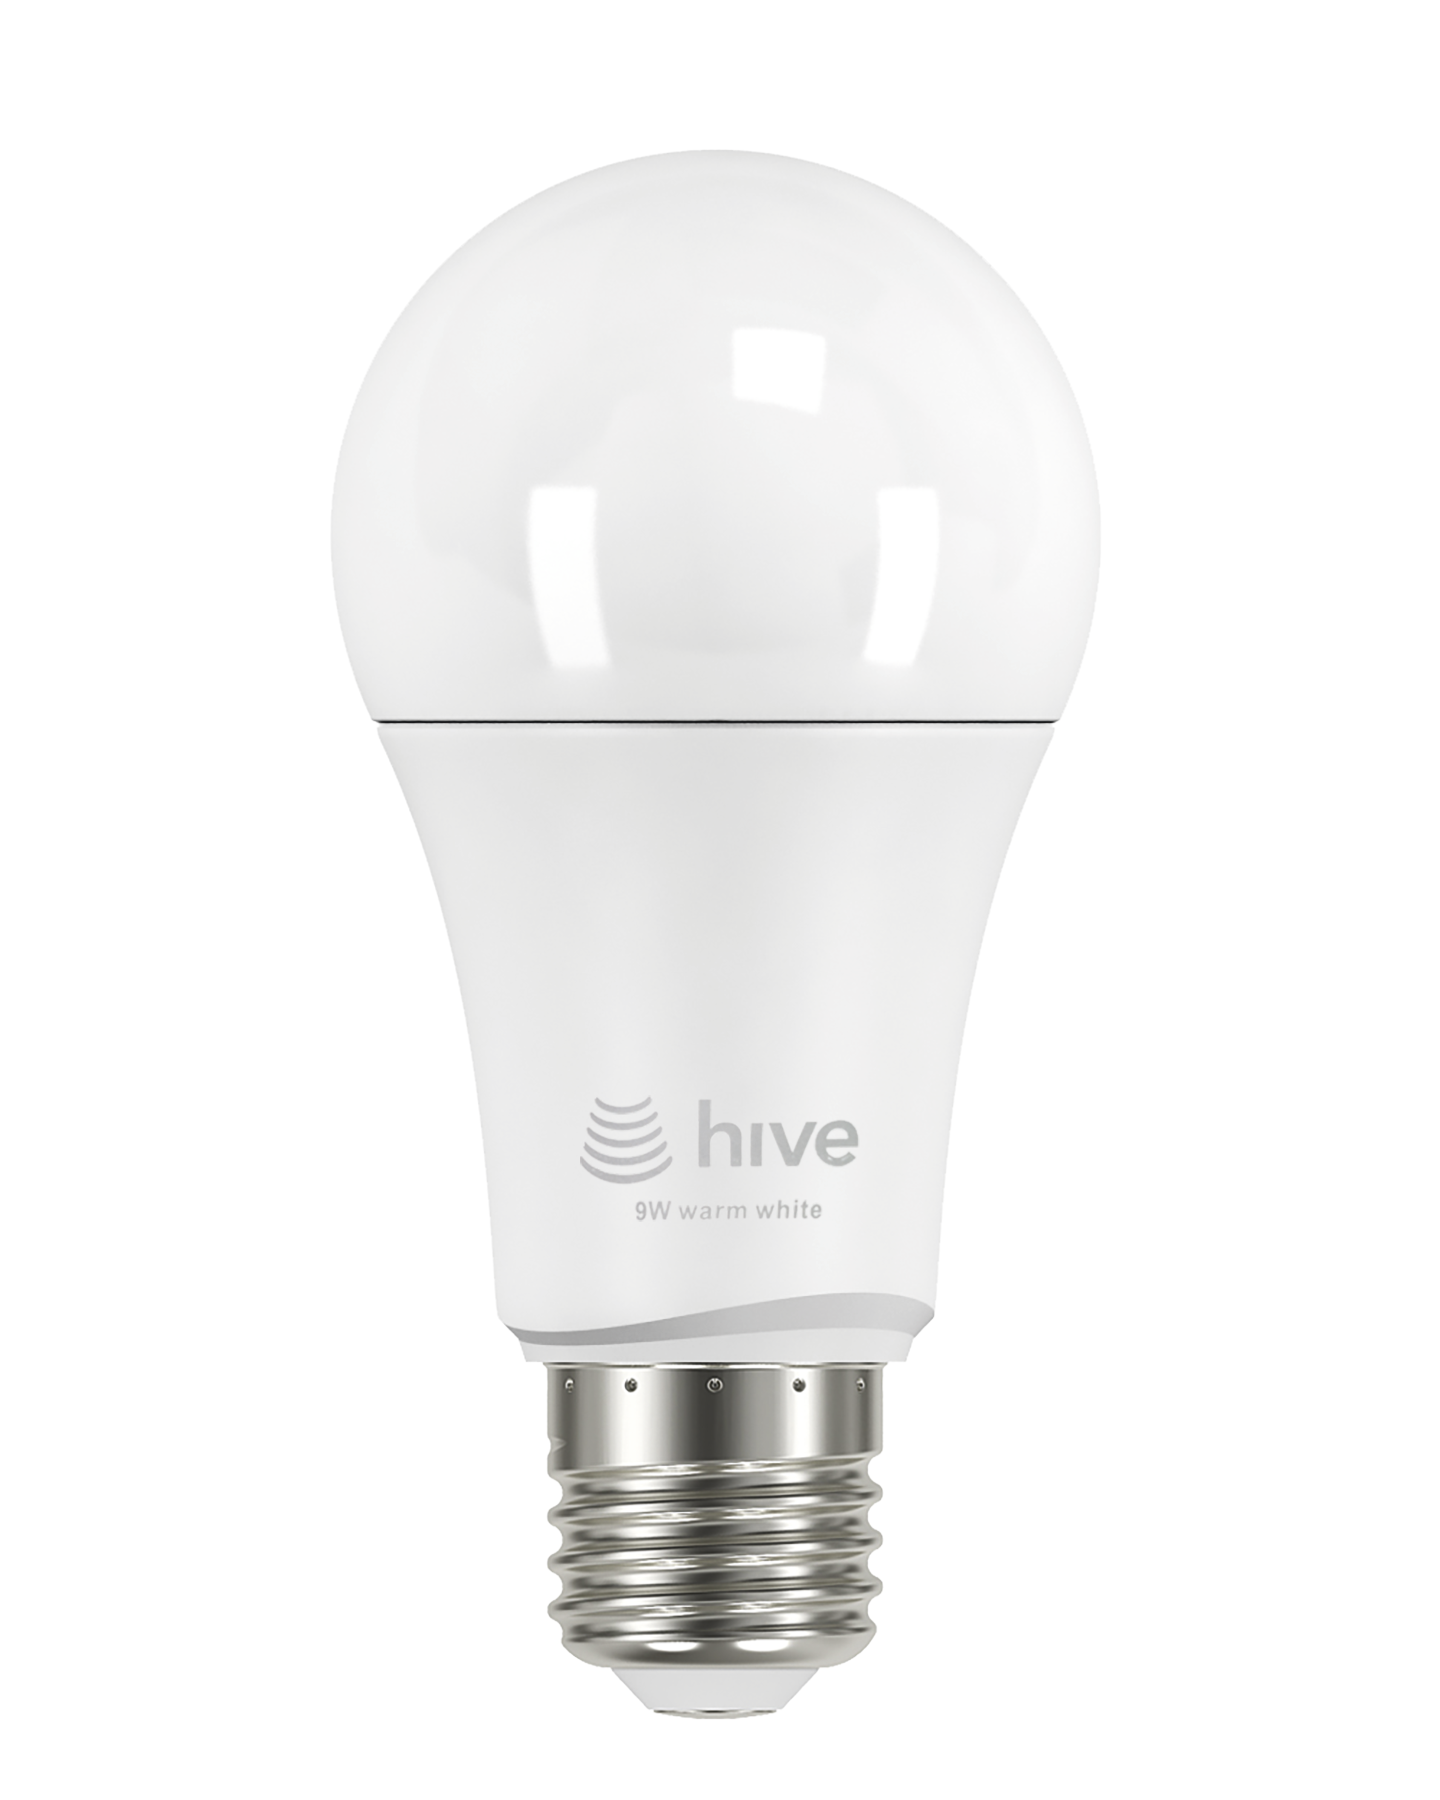 Hive Launches Active Light Smart Light Bulb